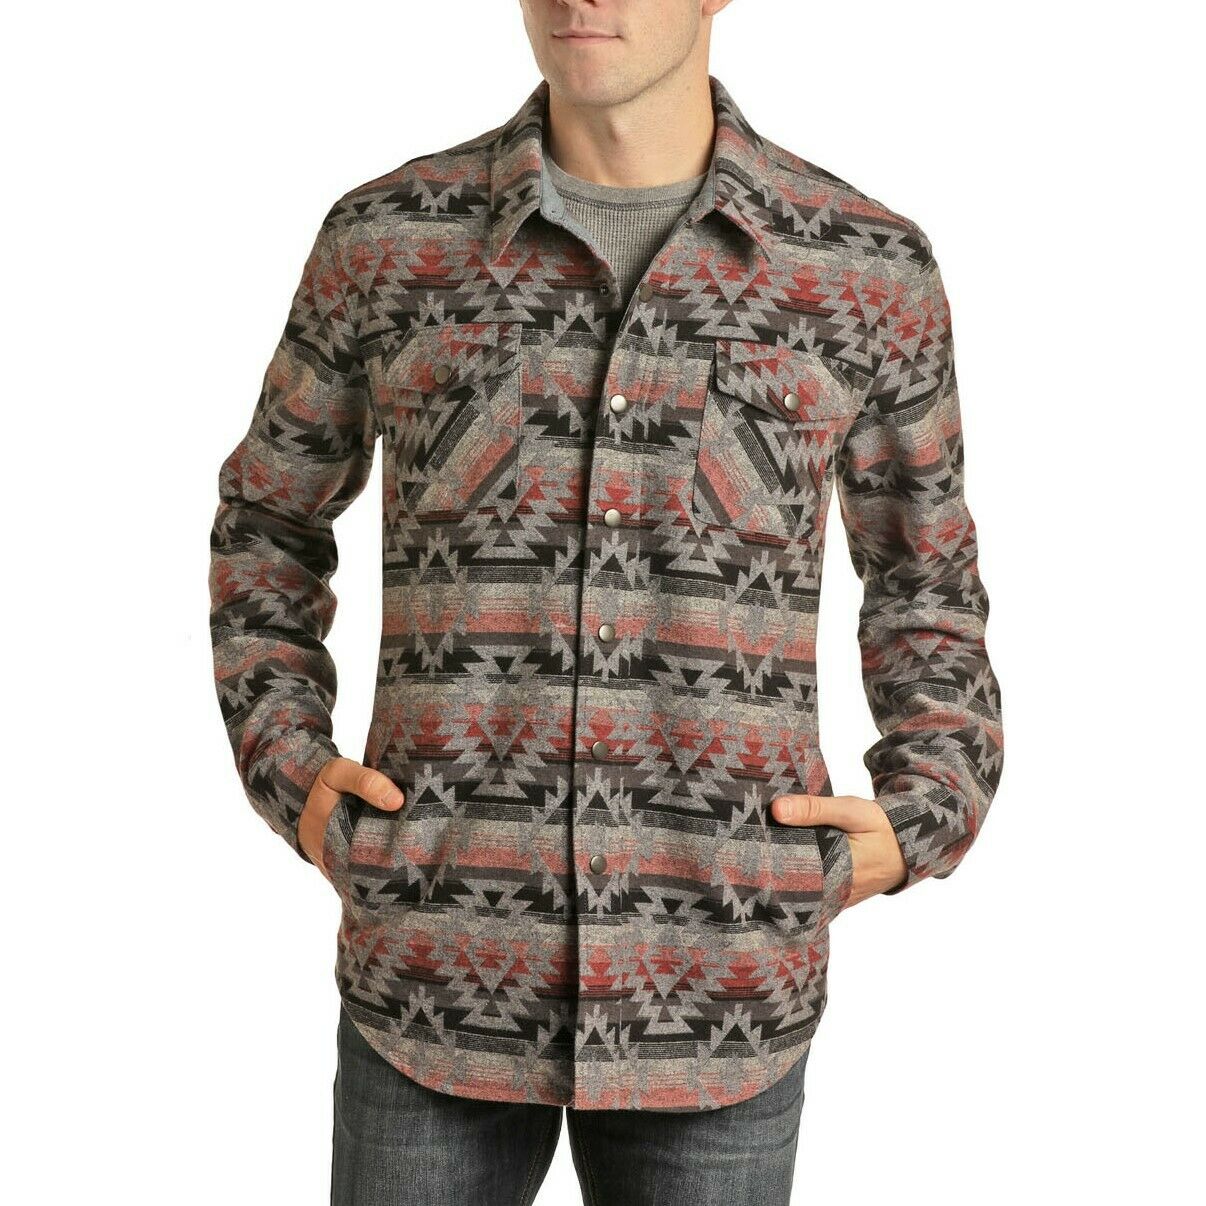 Powder River Men's Aztec Jacquard Fleece Jacket